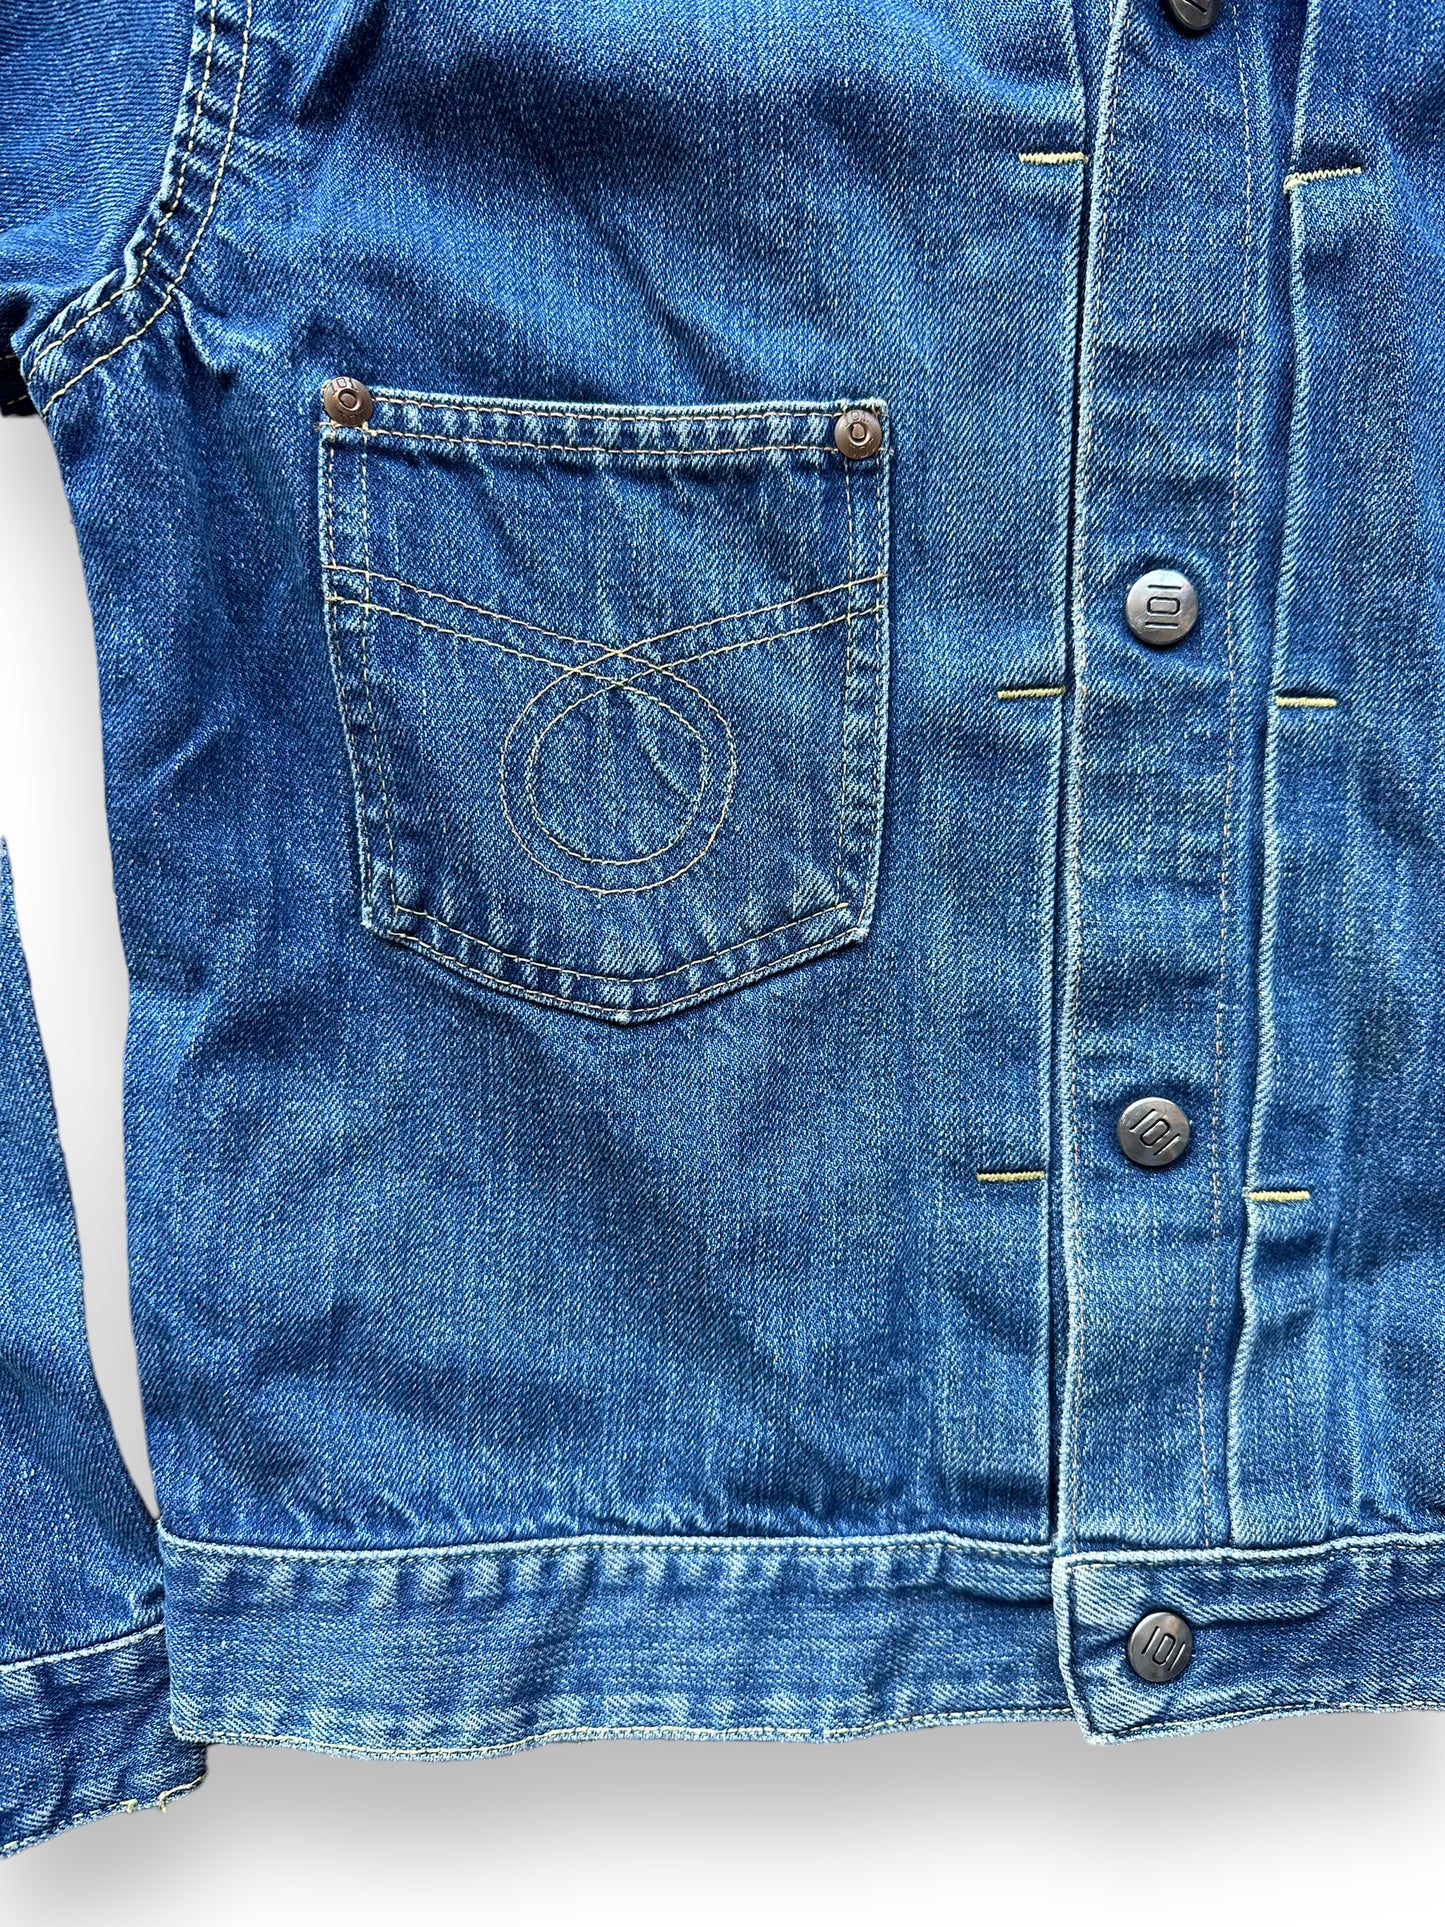 Right Pocket View of Vintage Montgomery Ward 101 Selvedge Denim Jacket SZ S | Vintage Jean Jacket Seattle | Seattle Vintage Denim